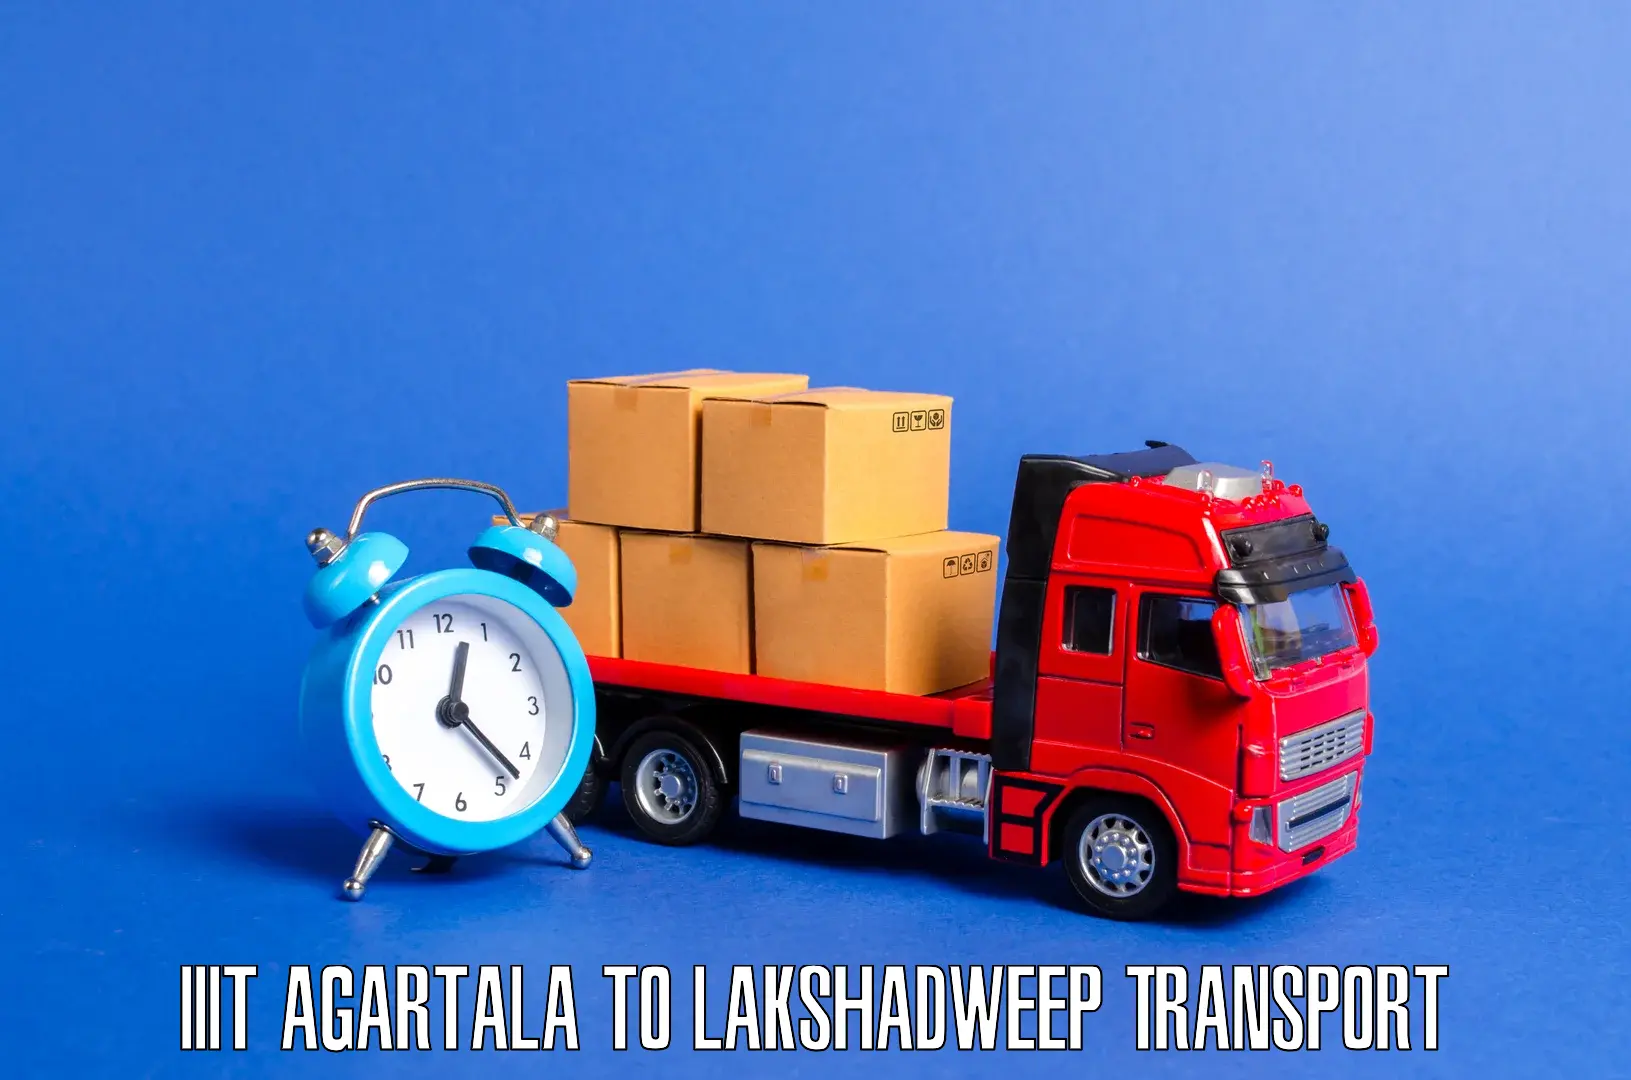 Nearby transport service IIIT Agartala to Lakshadweep